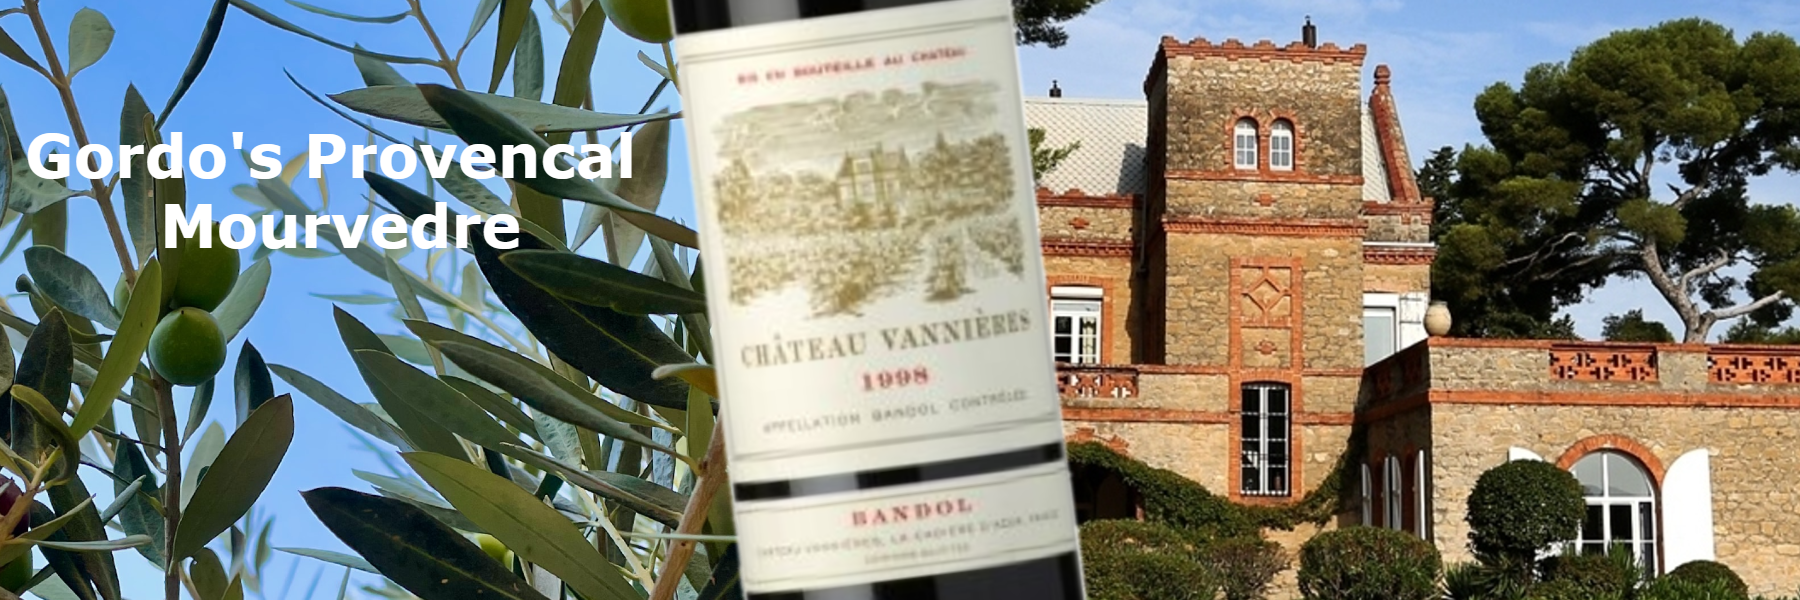 Chateau Vannieres: Gordo's Provencal Mourvedre